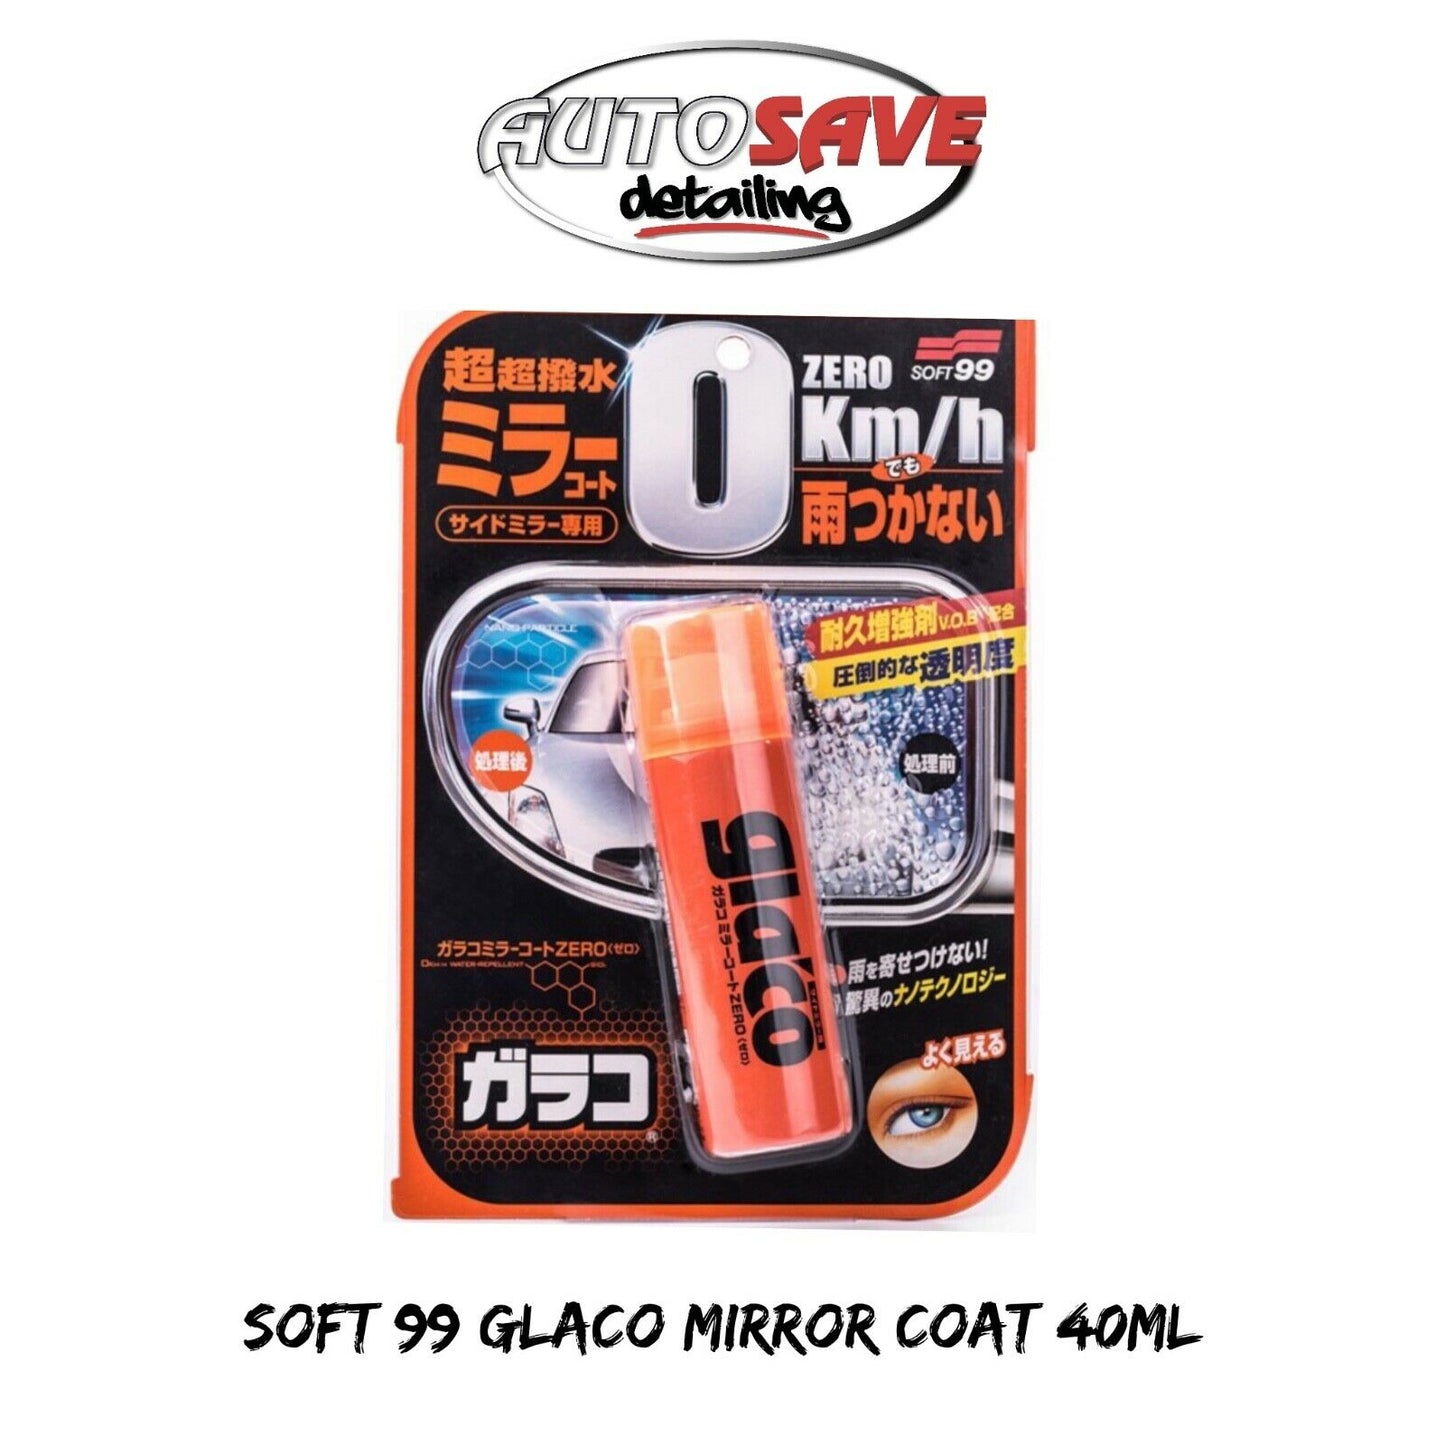 Soft99 Glaco Mirror Coat Zero 40ml Water Repellent Protective Coating UK STOCK